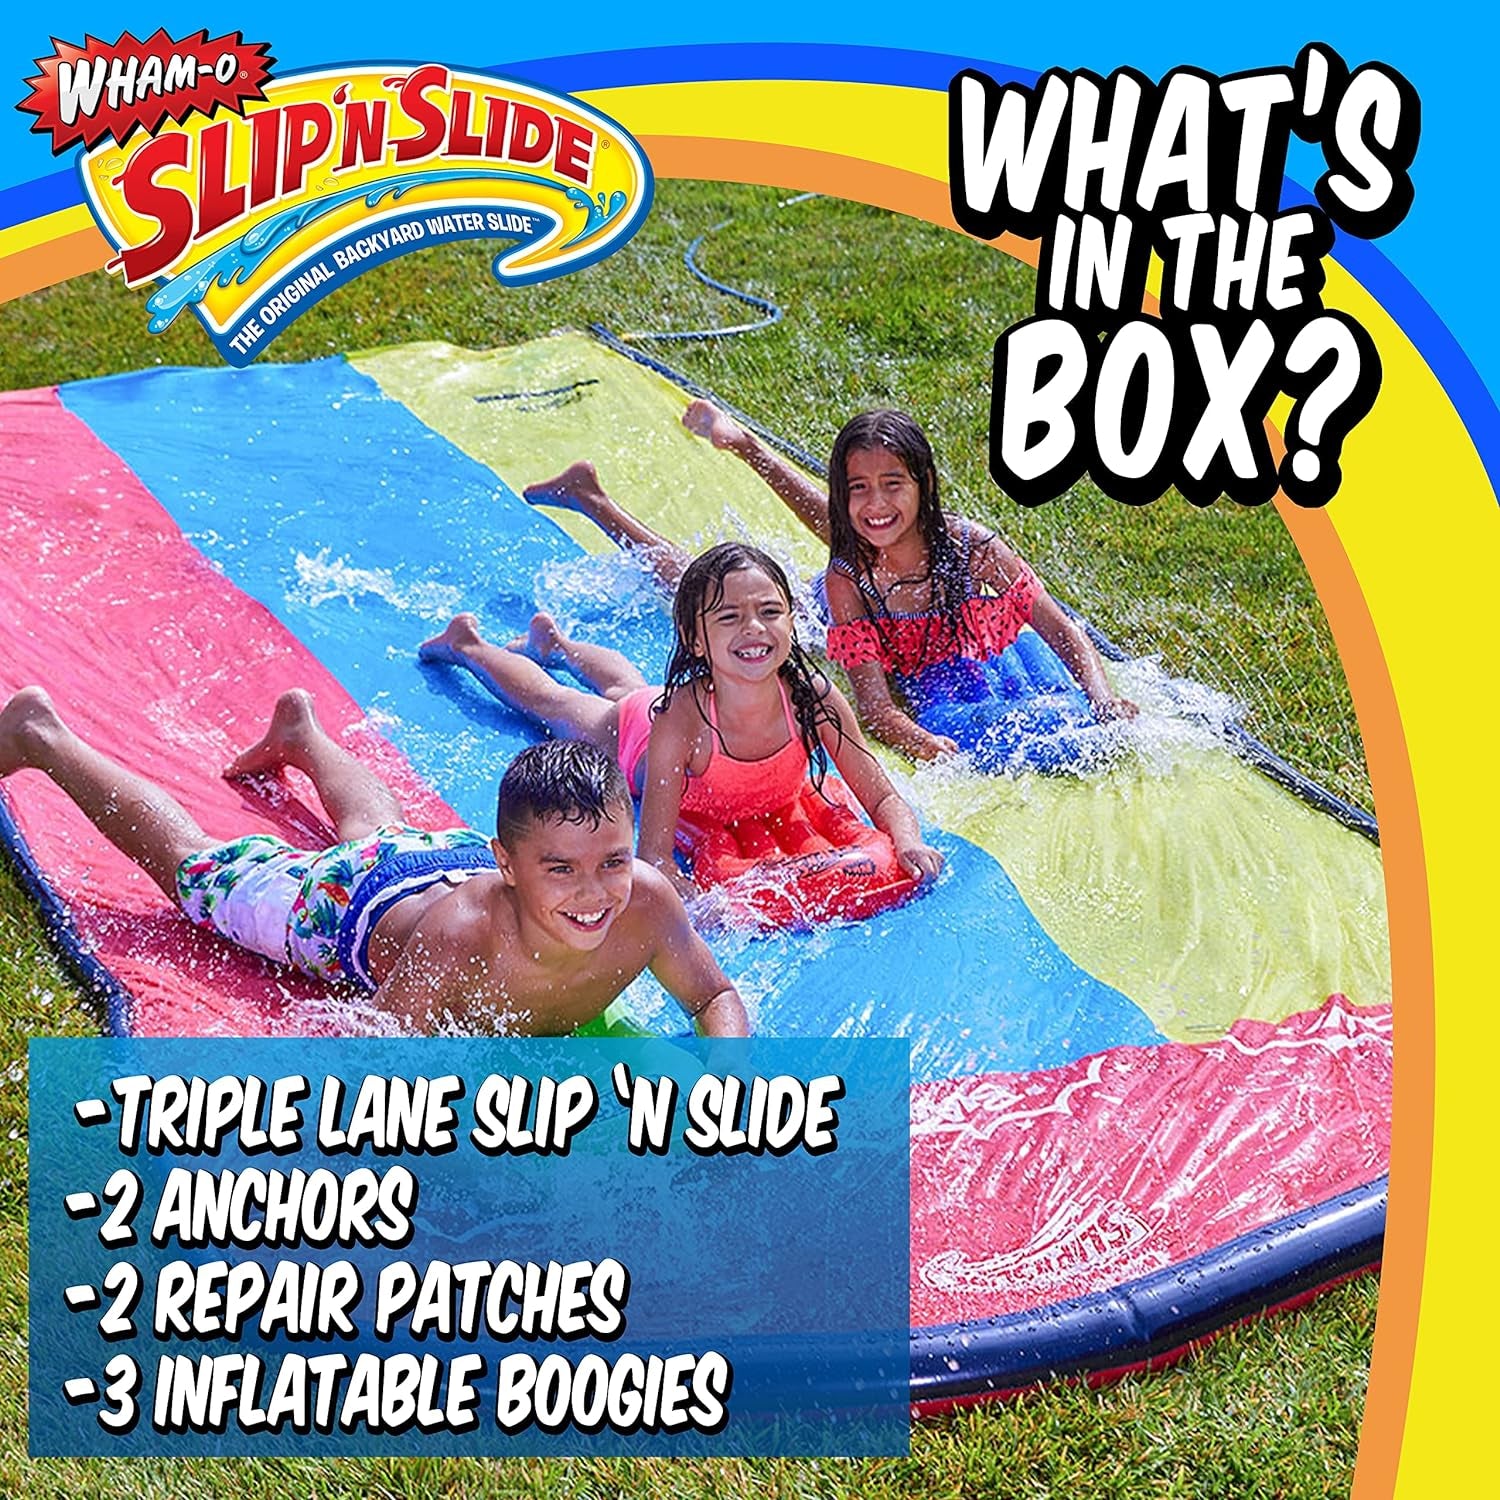 Slip N' Slide Triple Racer with Slide Boogie Board